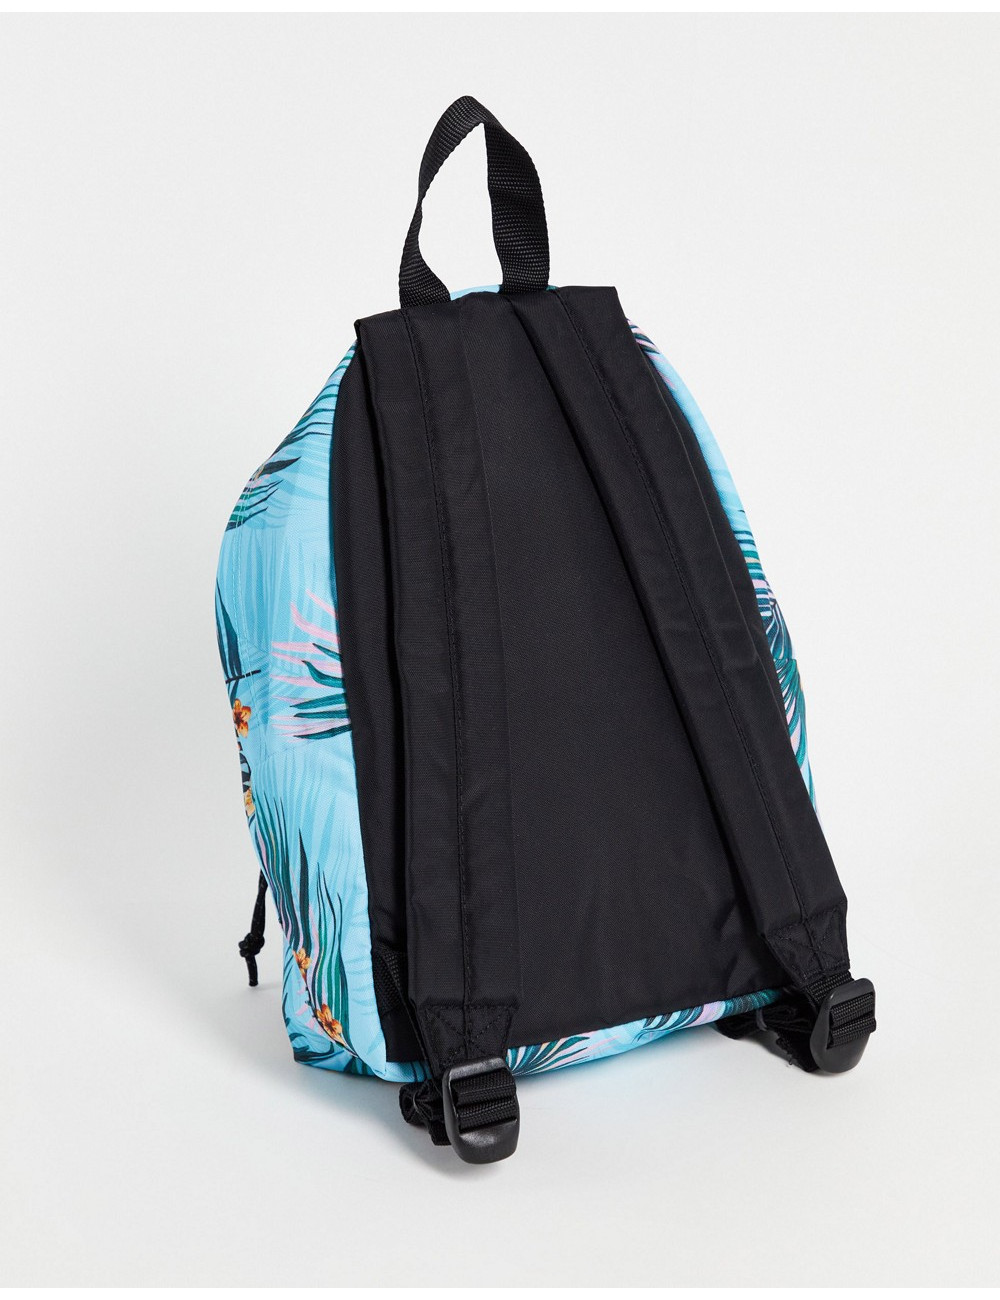 Eastpak orbit backpack in blue